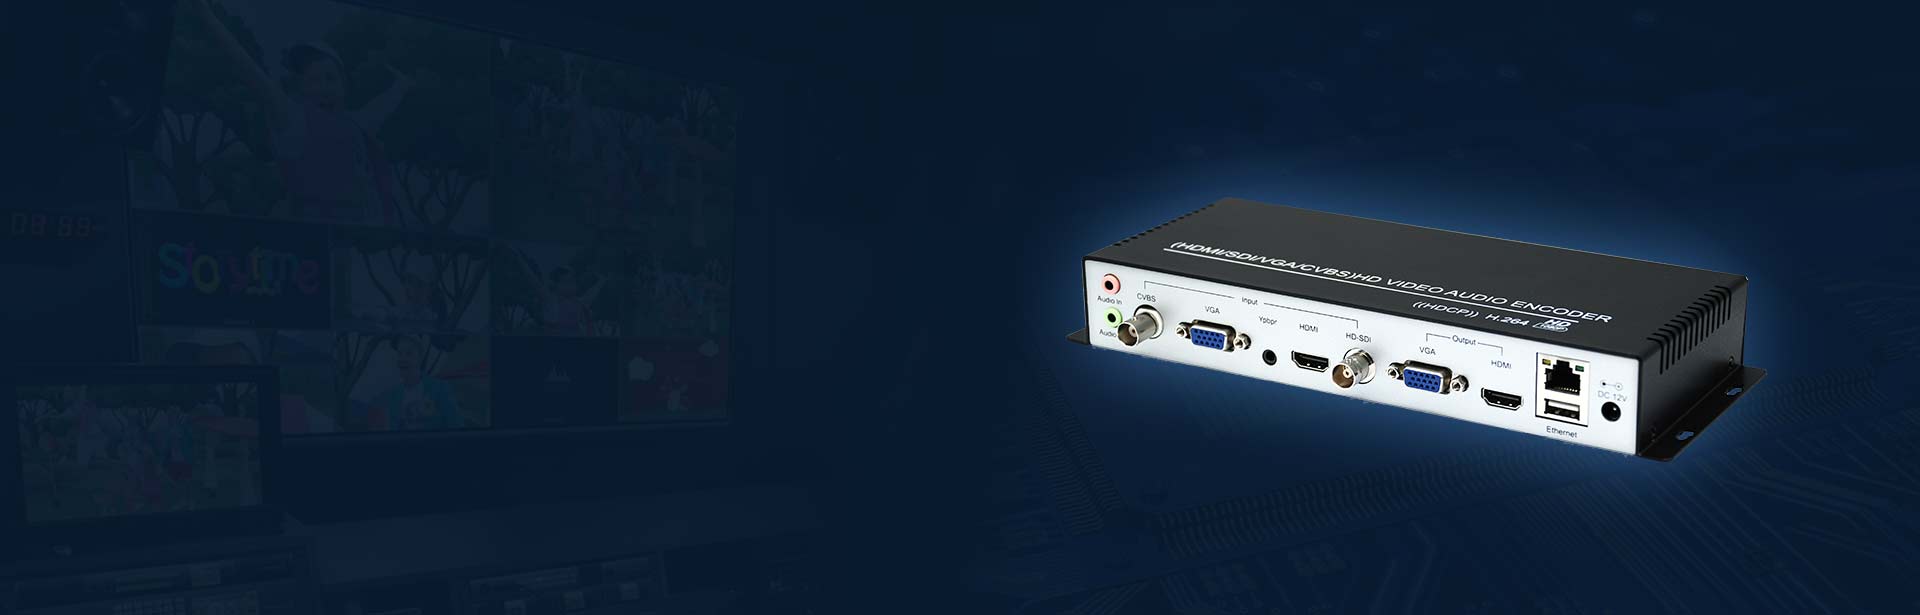 H.264 Multi-interface Video Encoder  For IPTV, Live Stream, Broadcast